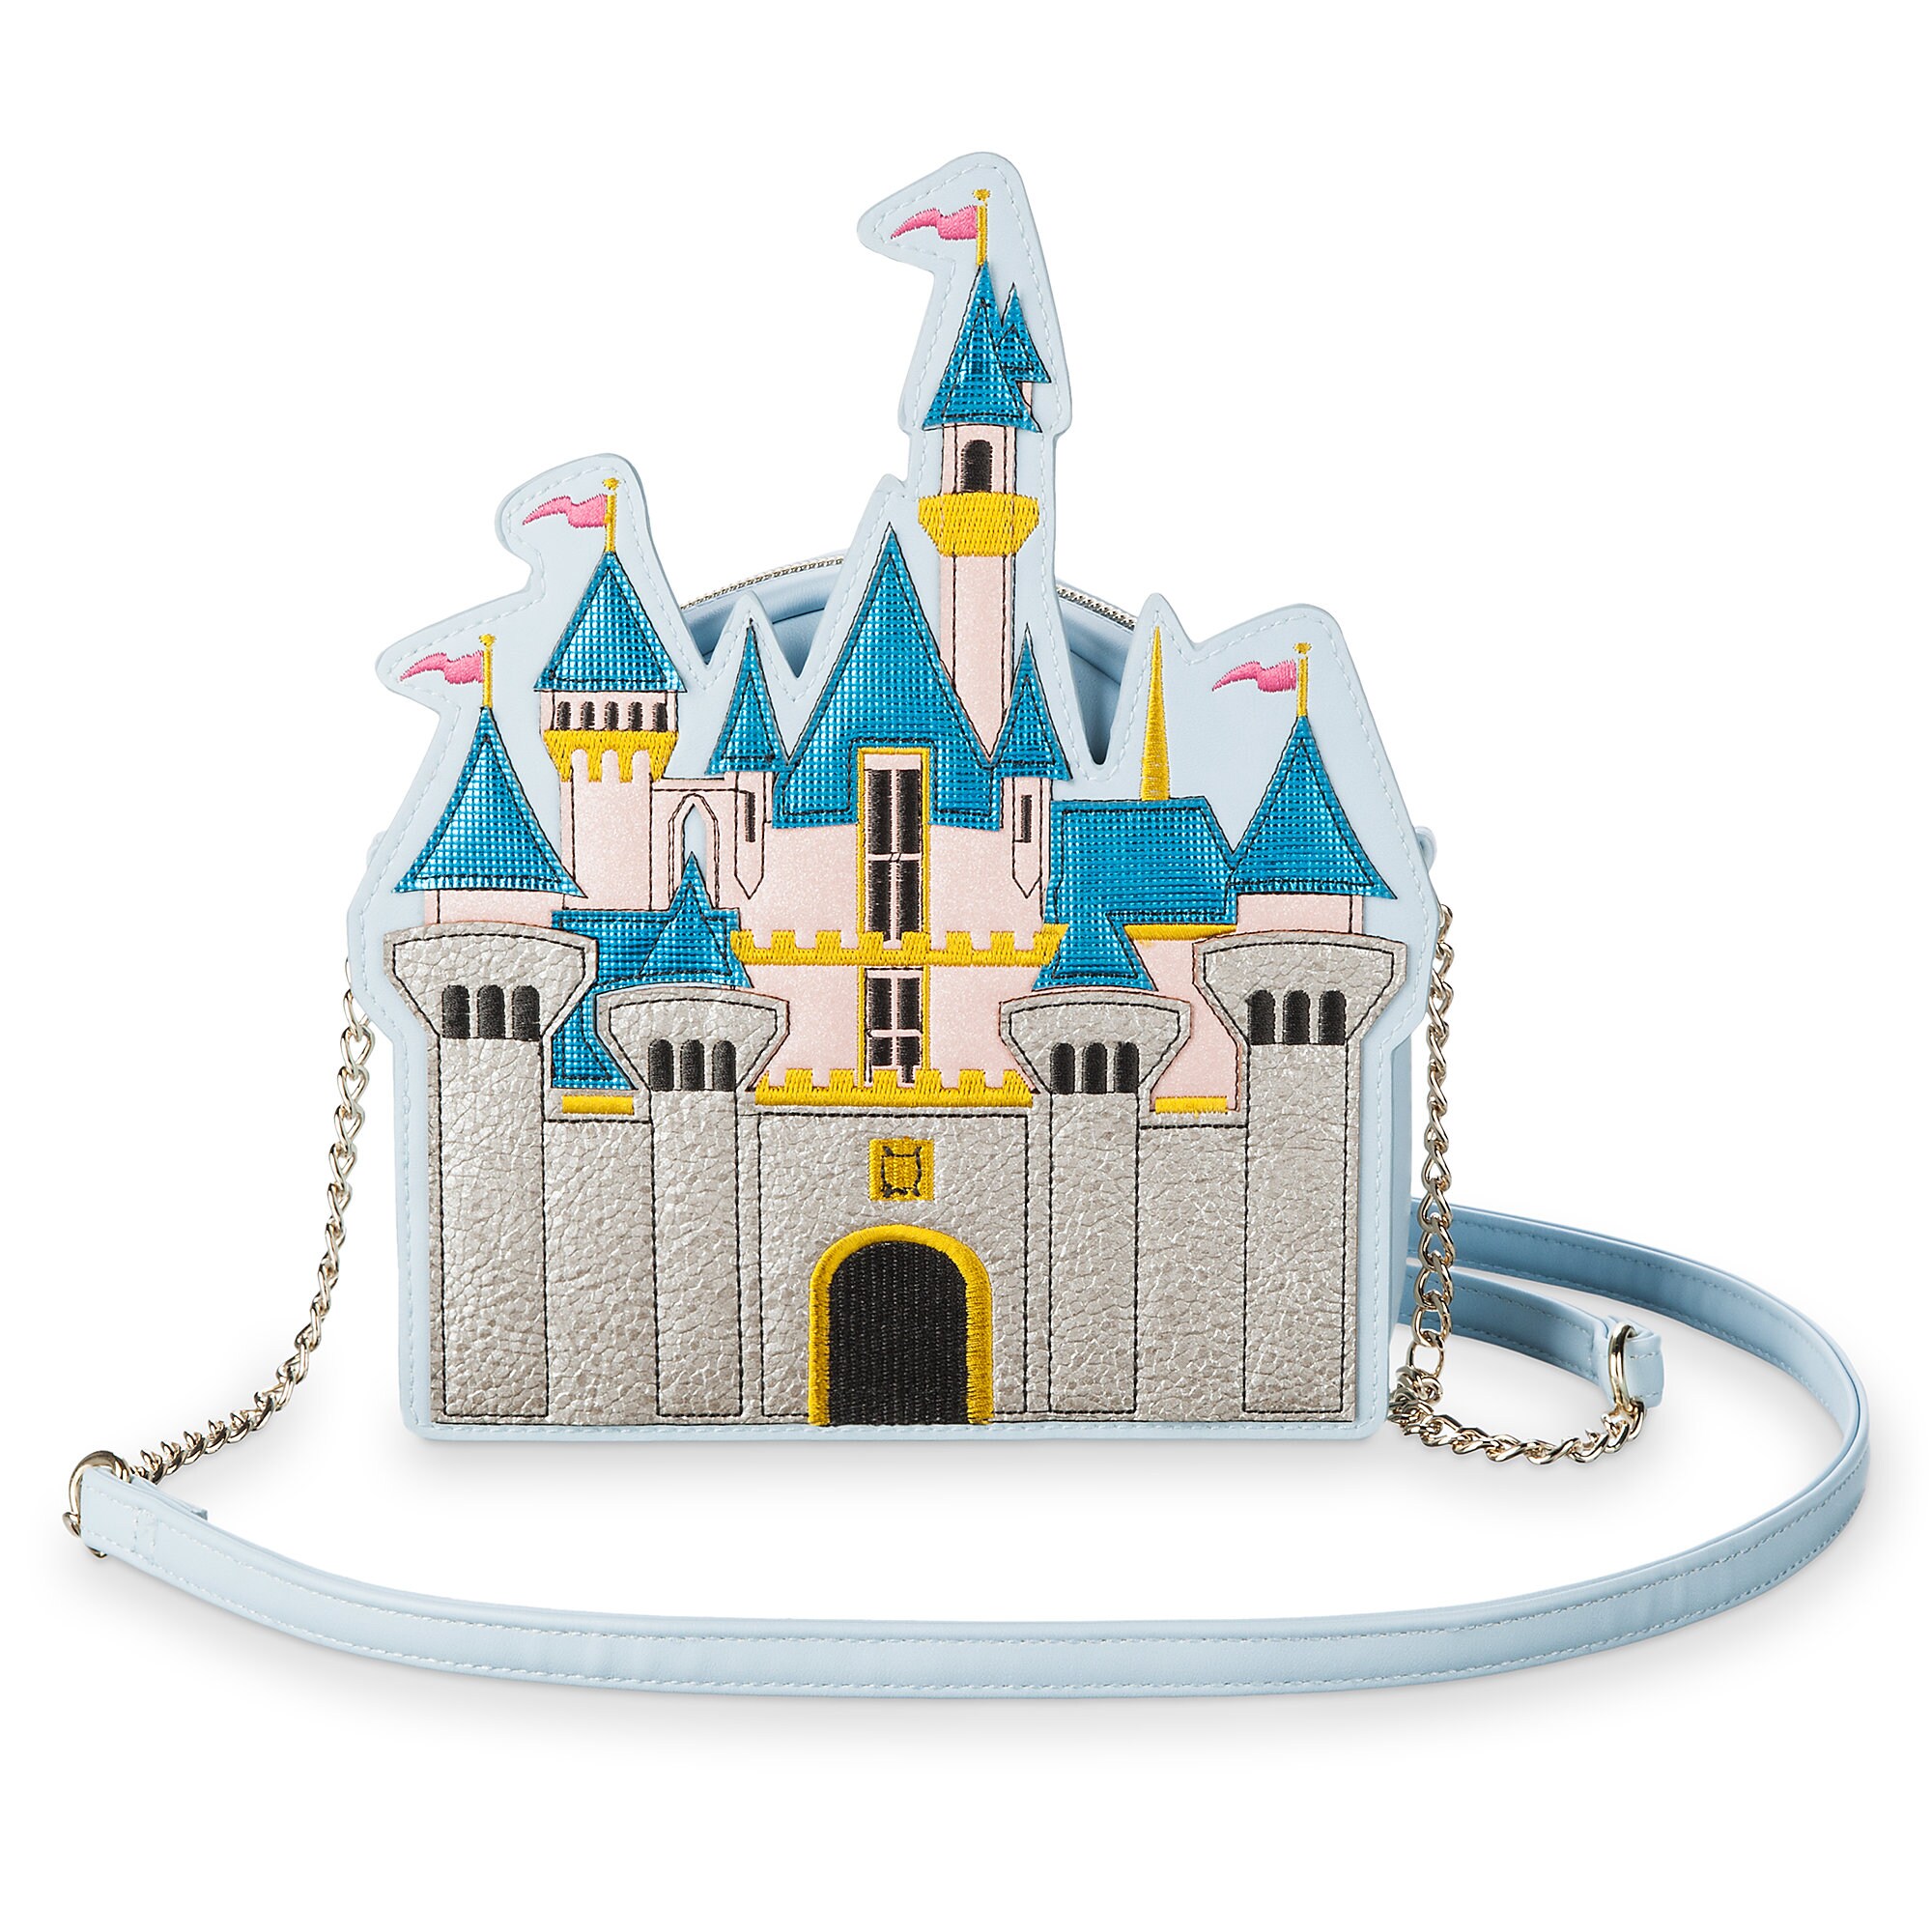 Sleeping Beauty Castle Crossbody Bag by Danielle Nicole - Disneyland